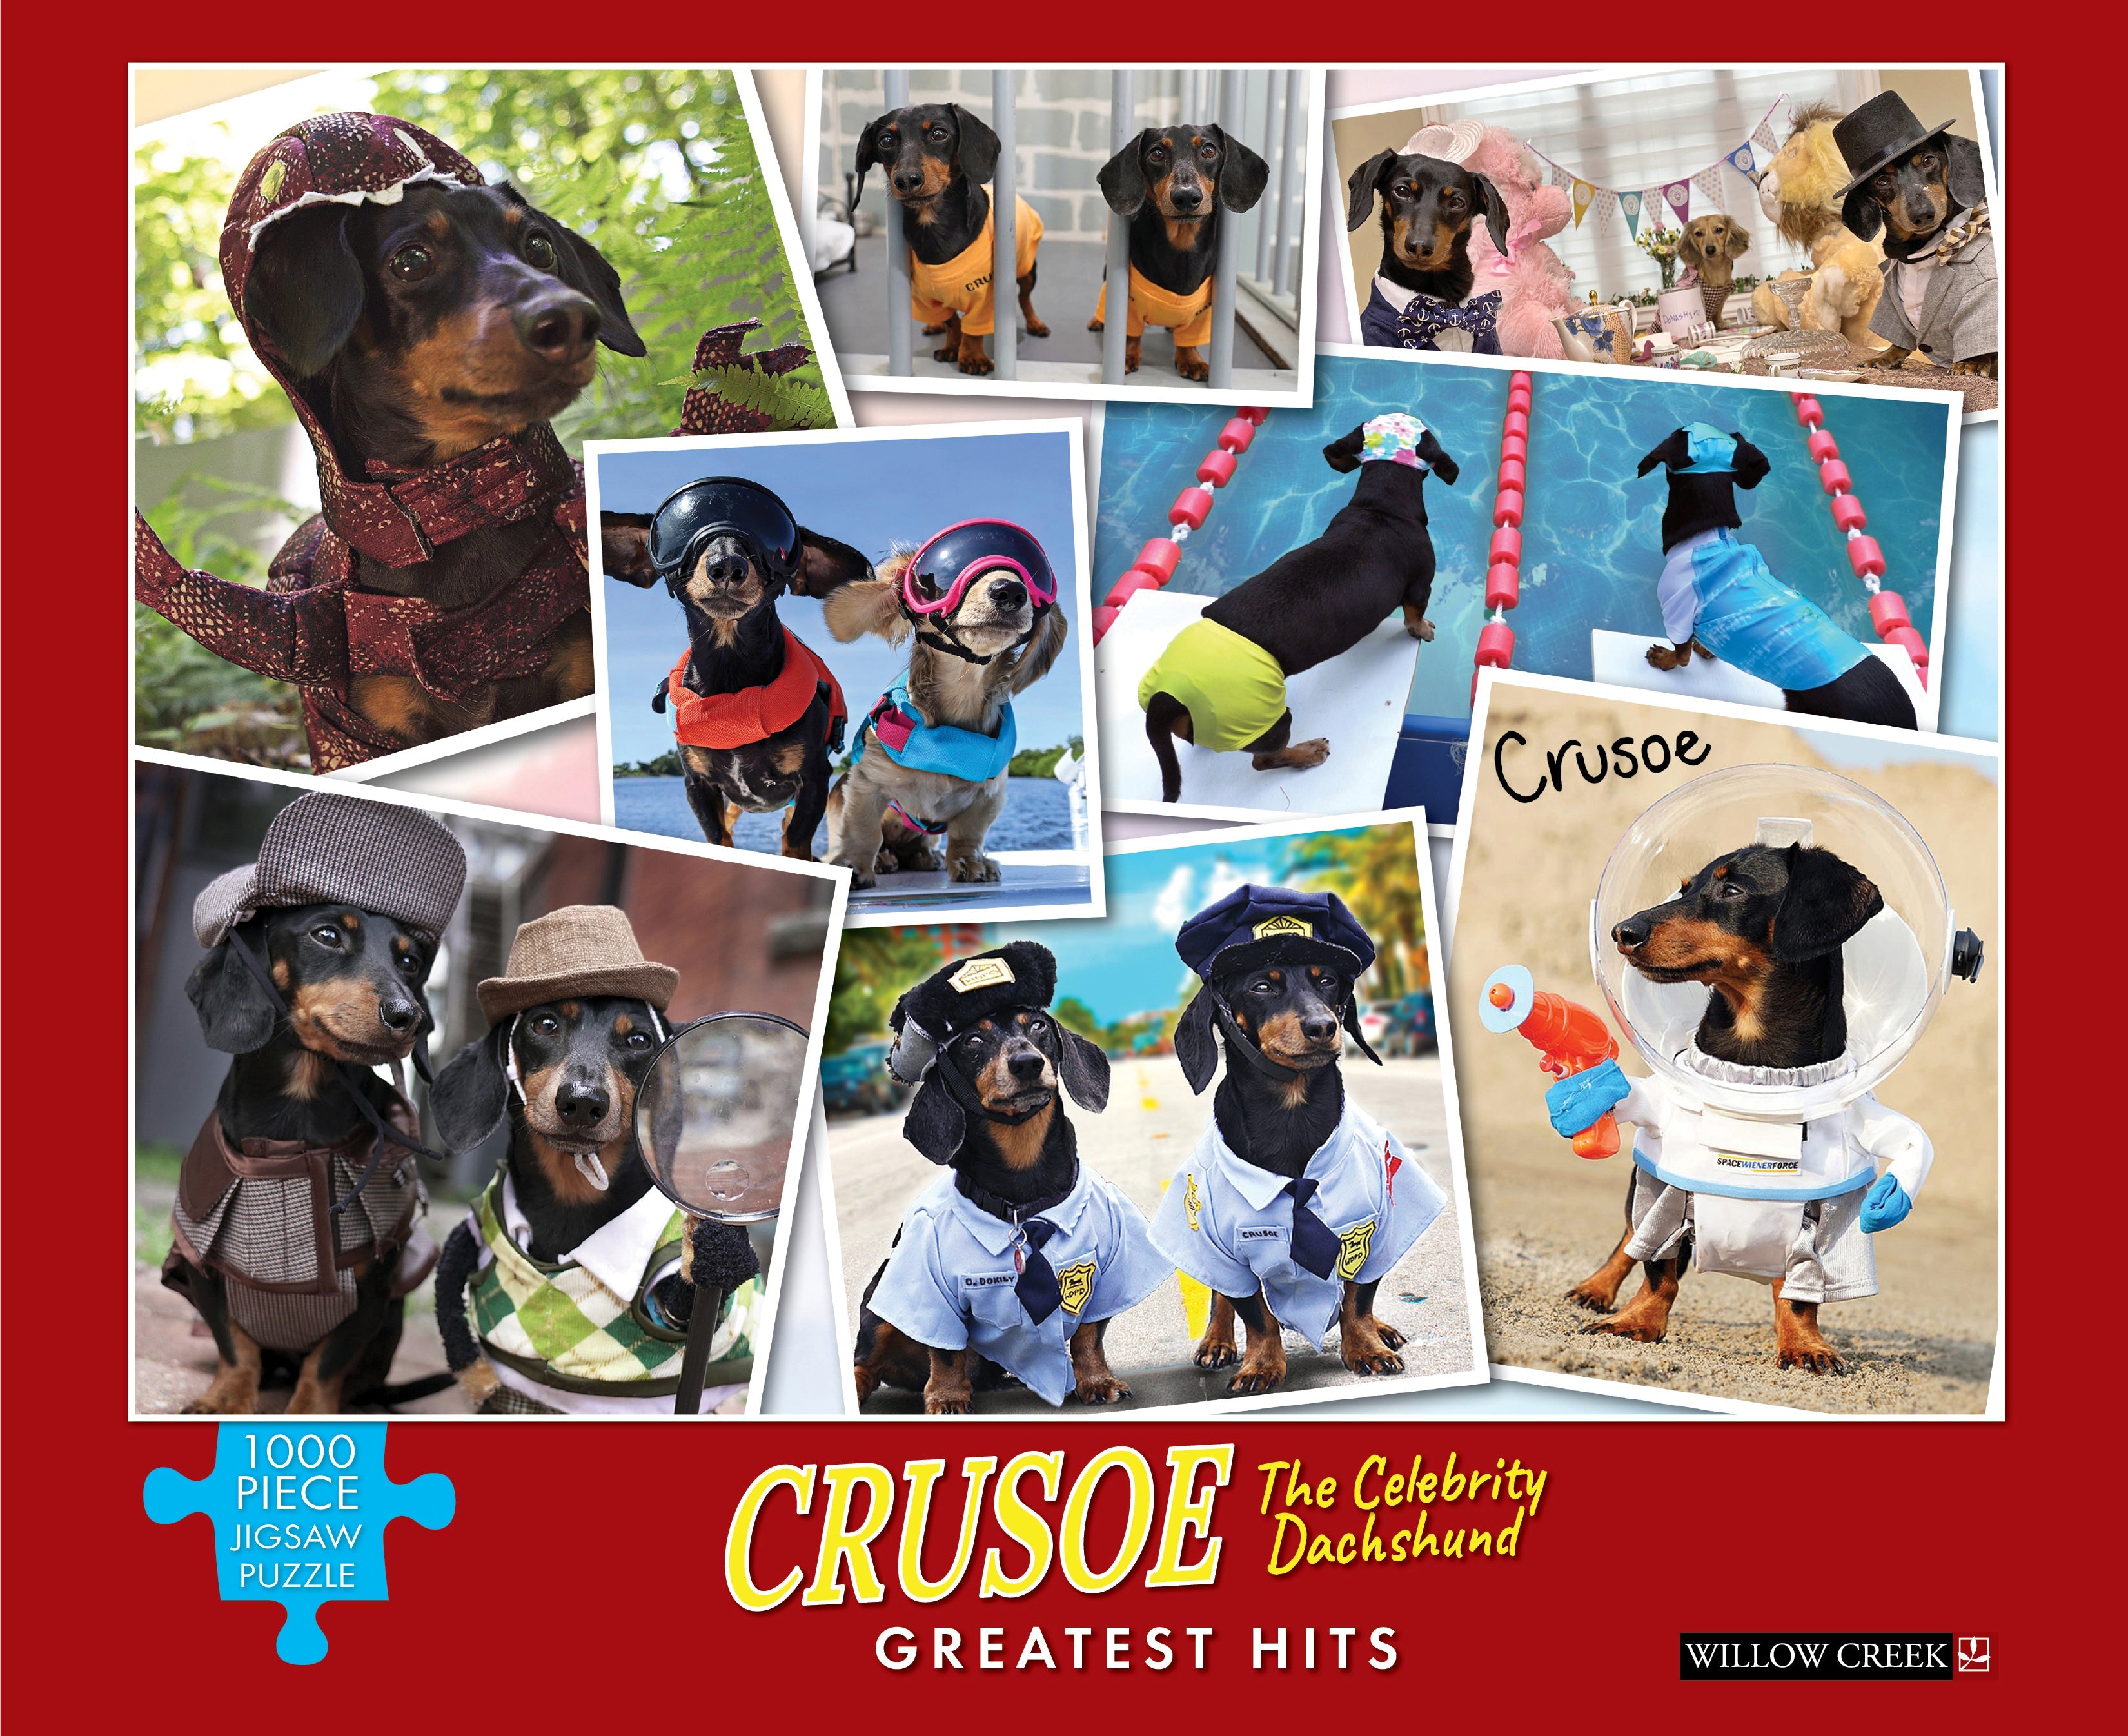 Crusoe's Greatest Hits 1000 Piece - Jigsaw Puzzle